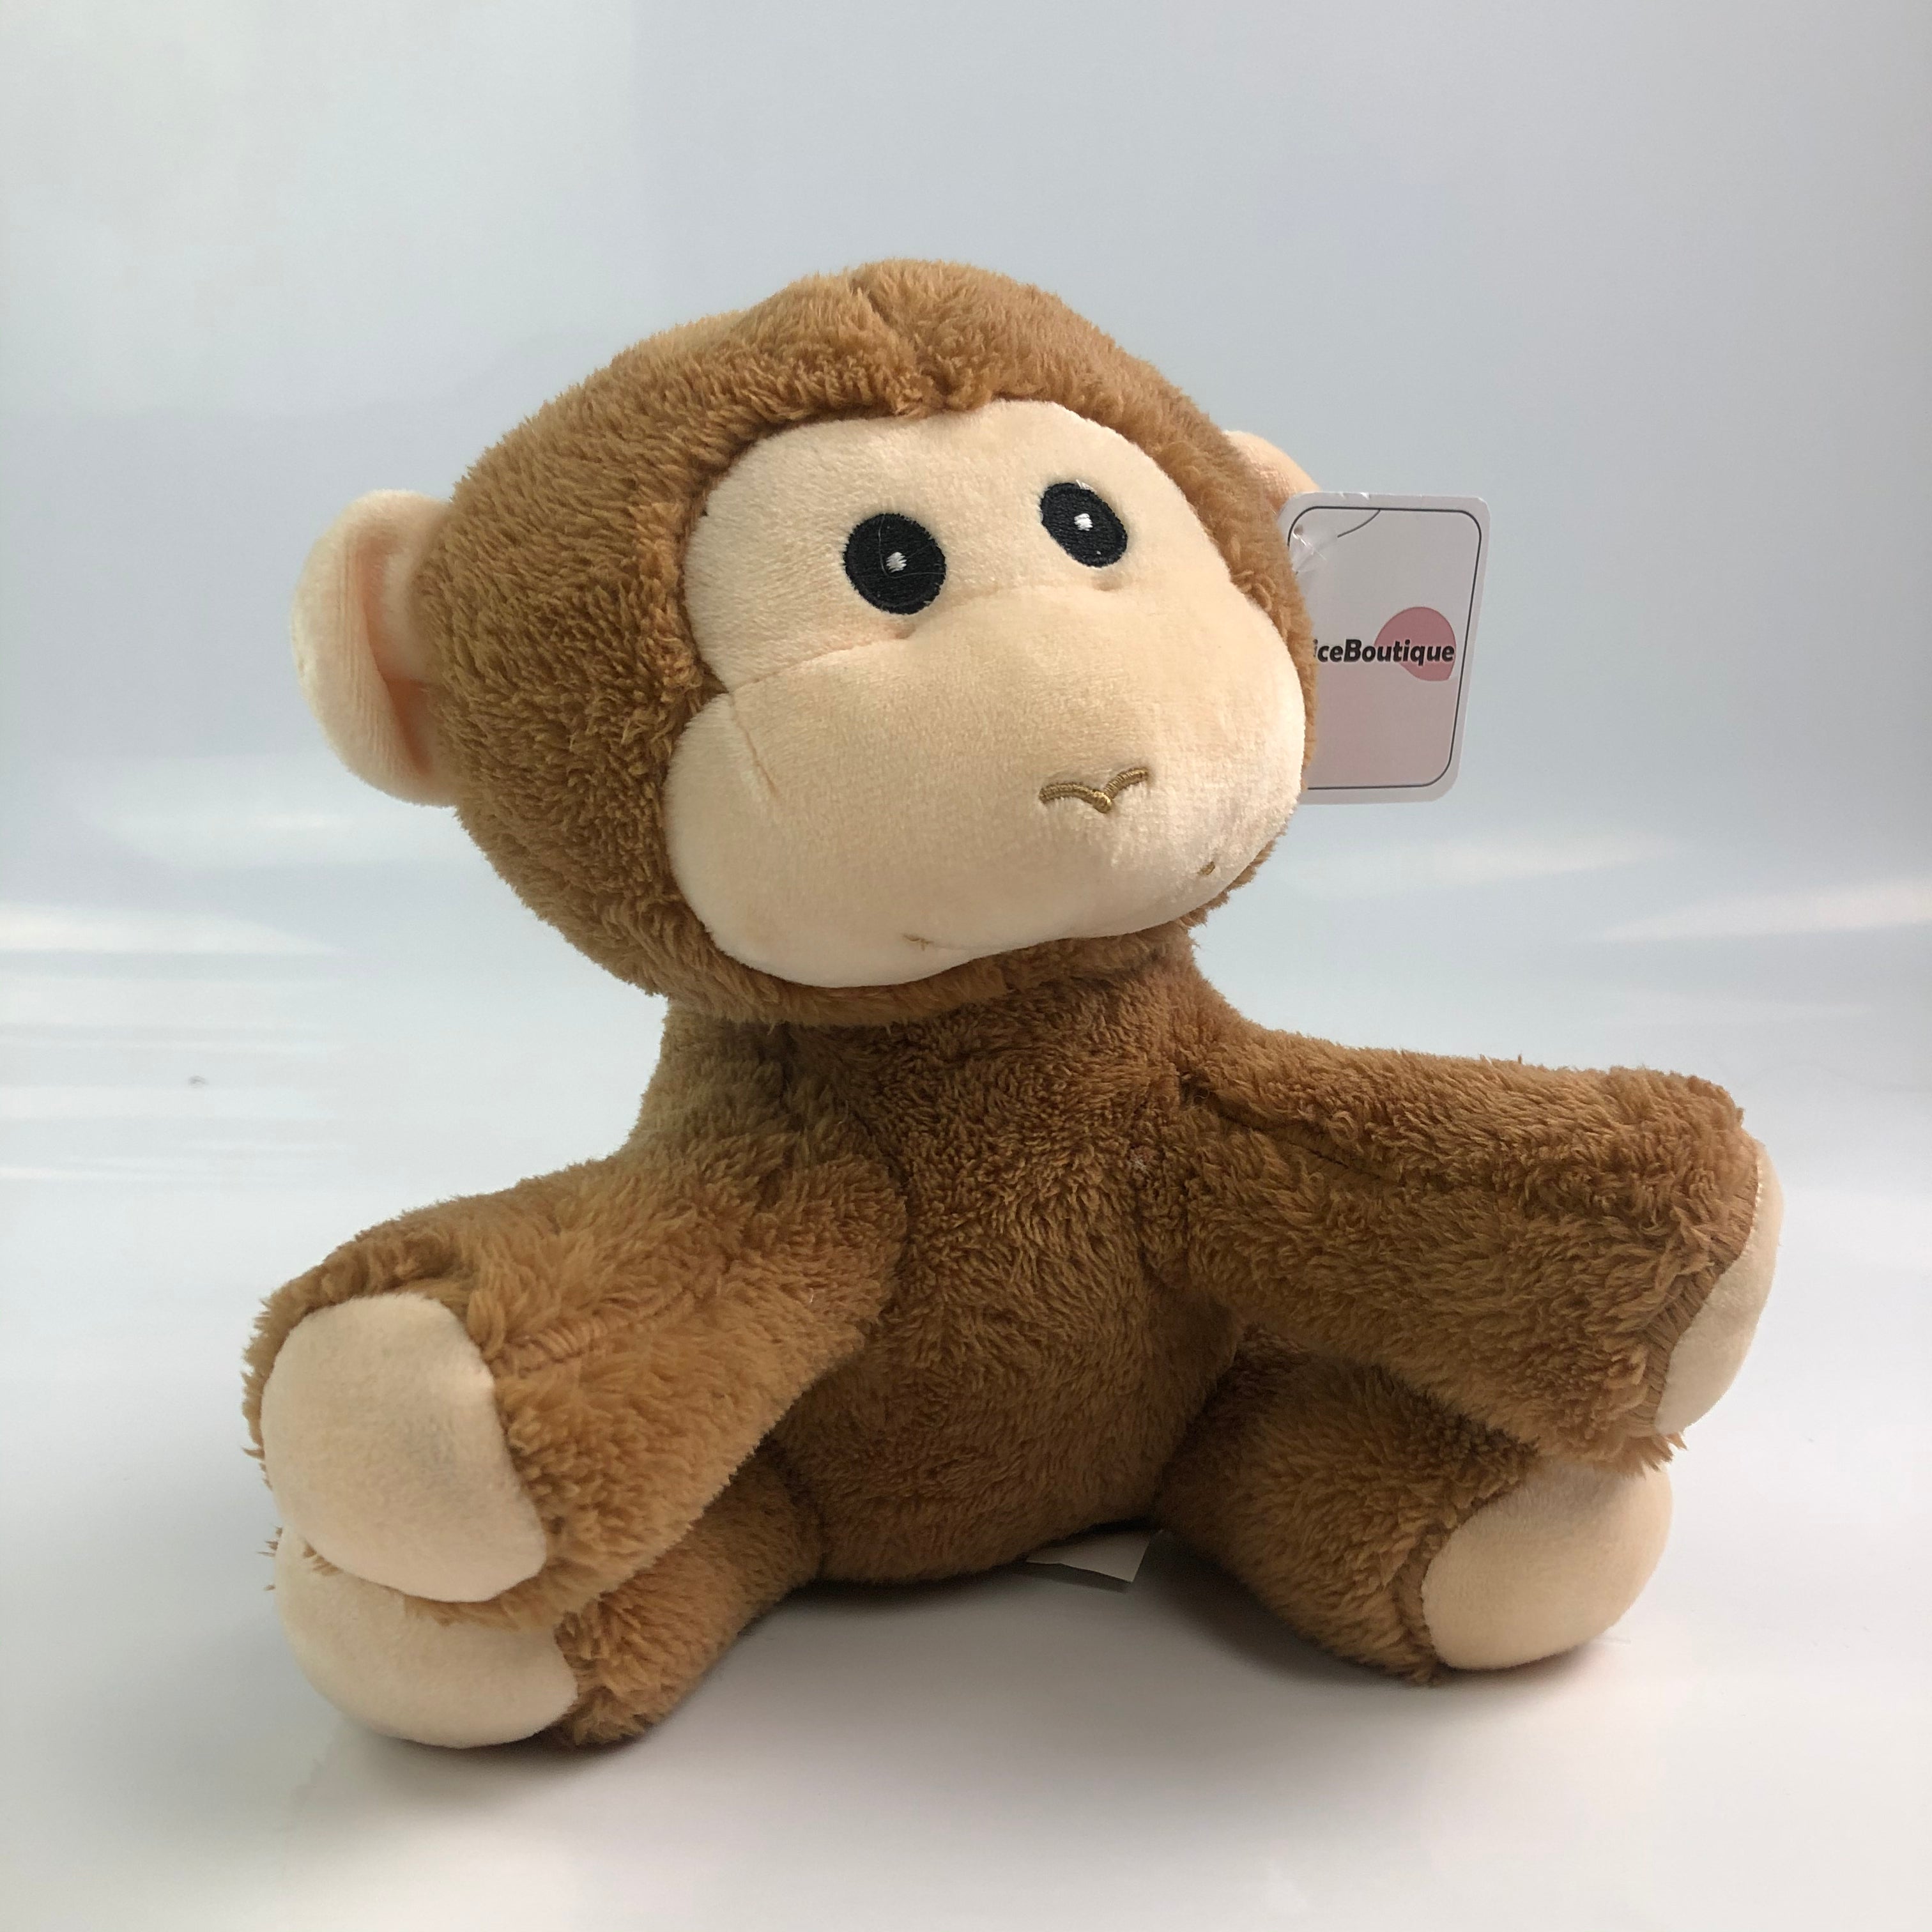 NiceBoutique Monkey Stuffed animal Plush Toys - Glow Guards